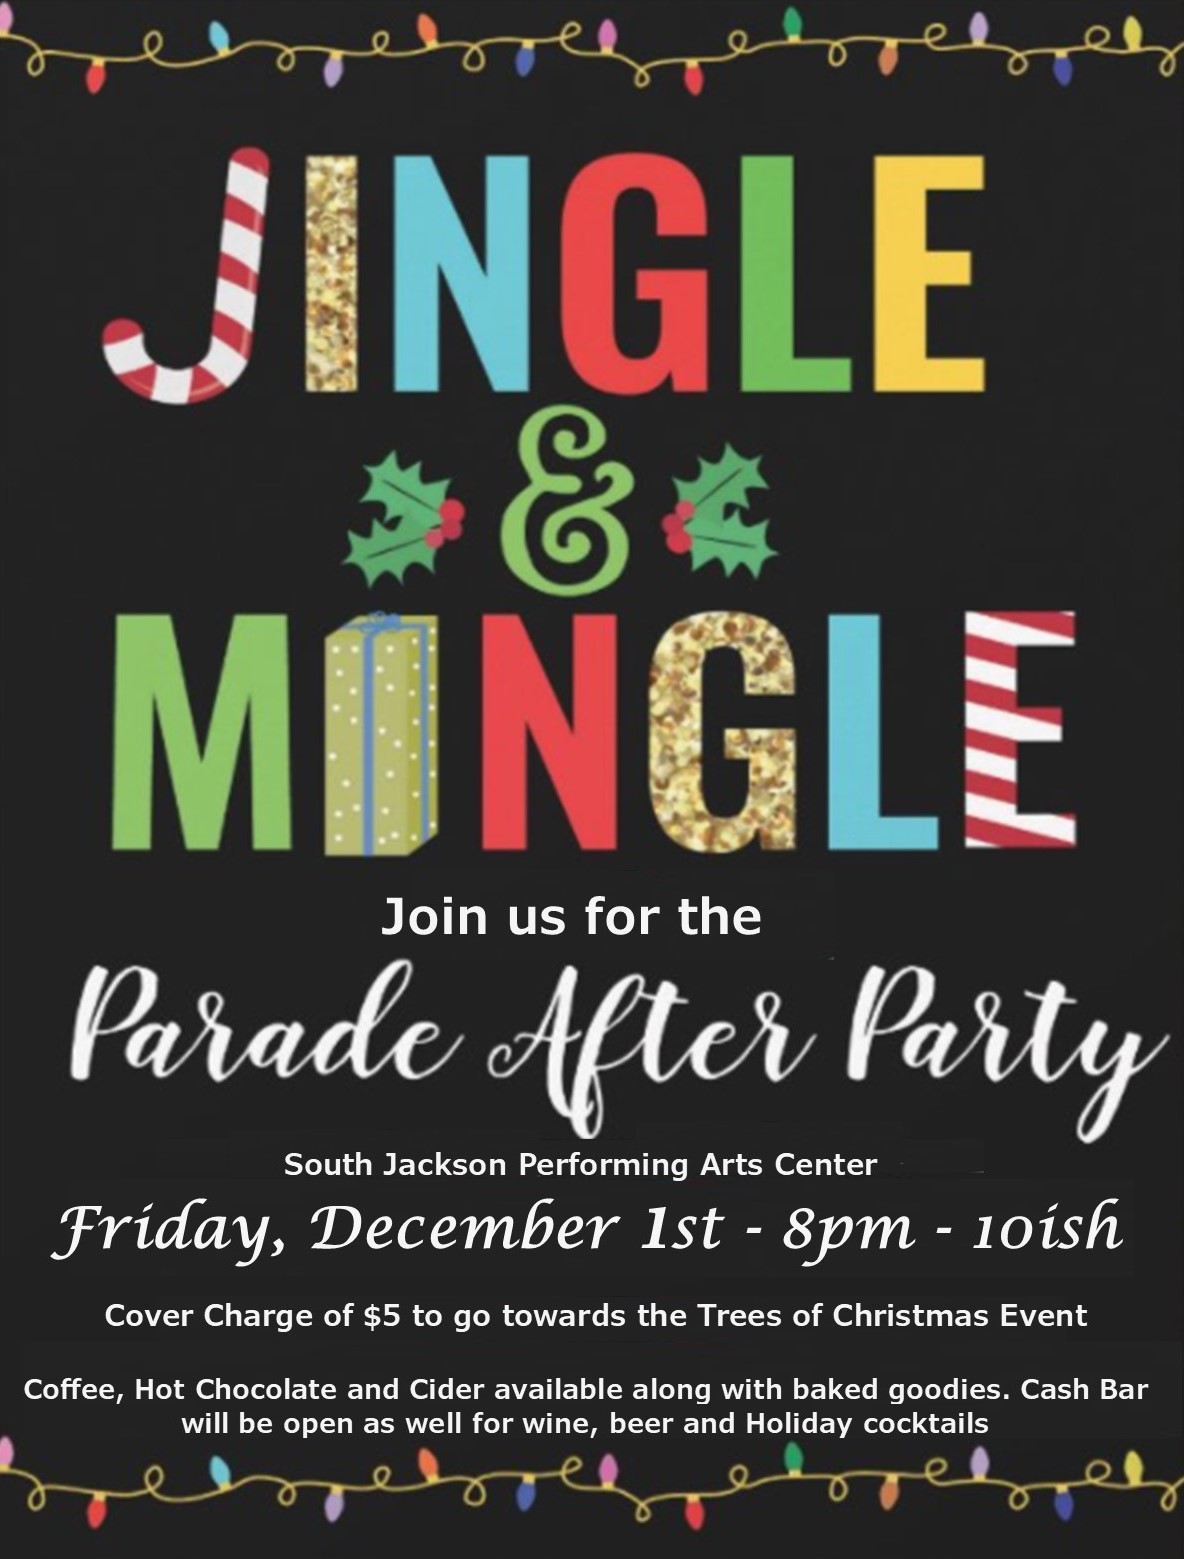 Jingle & Mingle - Parade After Party Promo Image